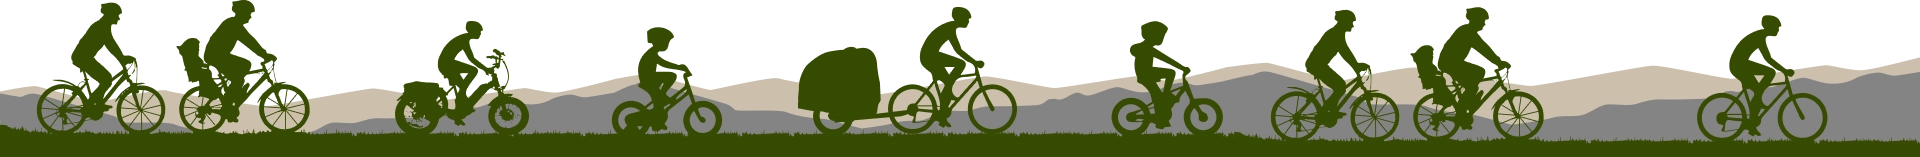 Cycling Image